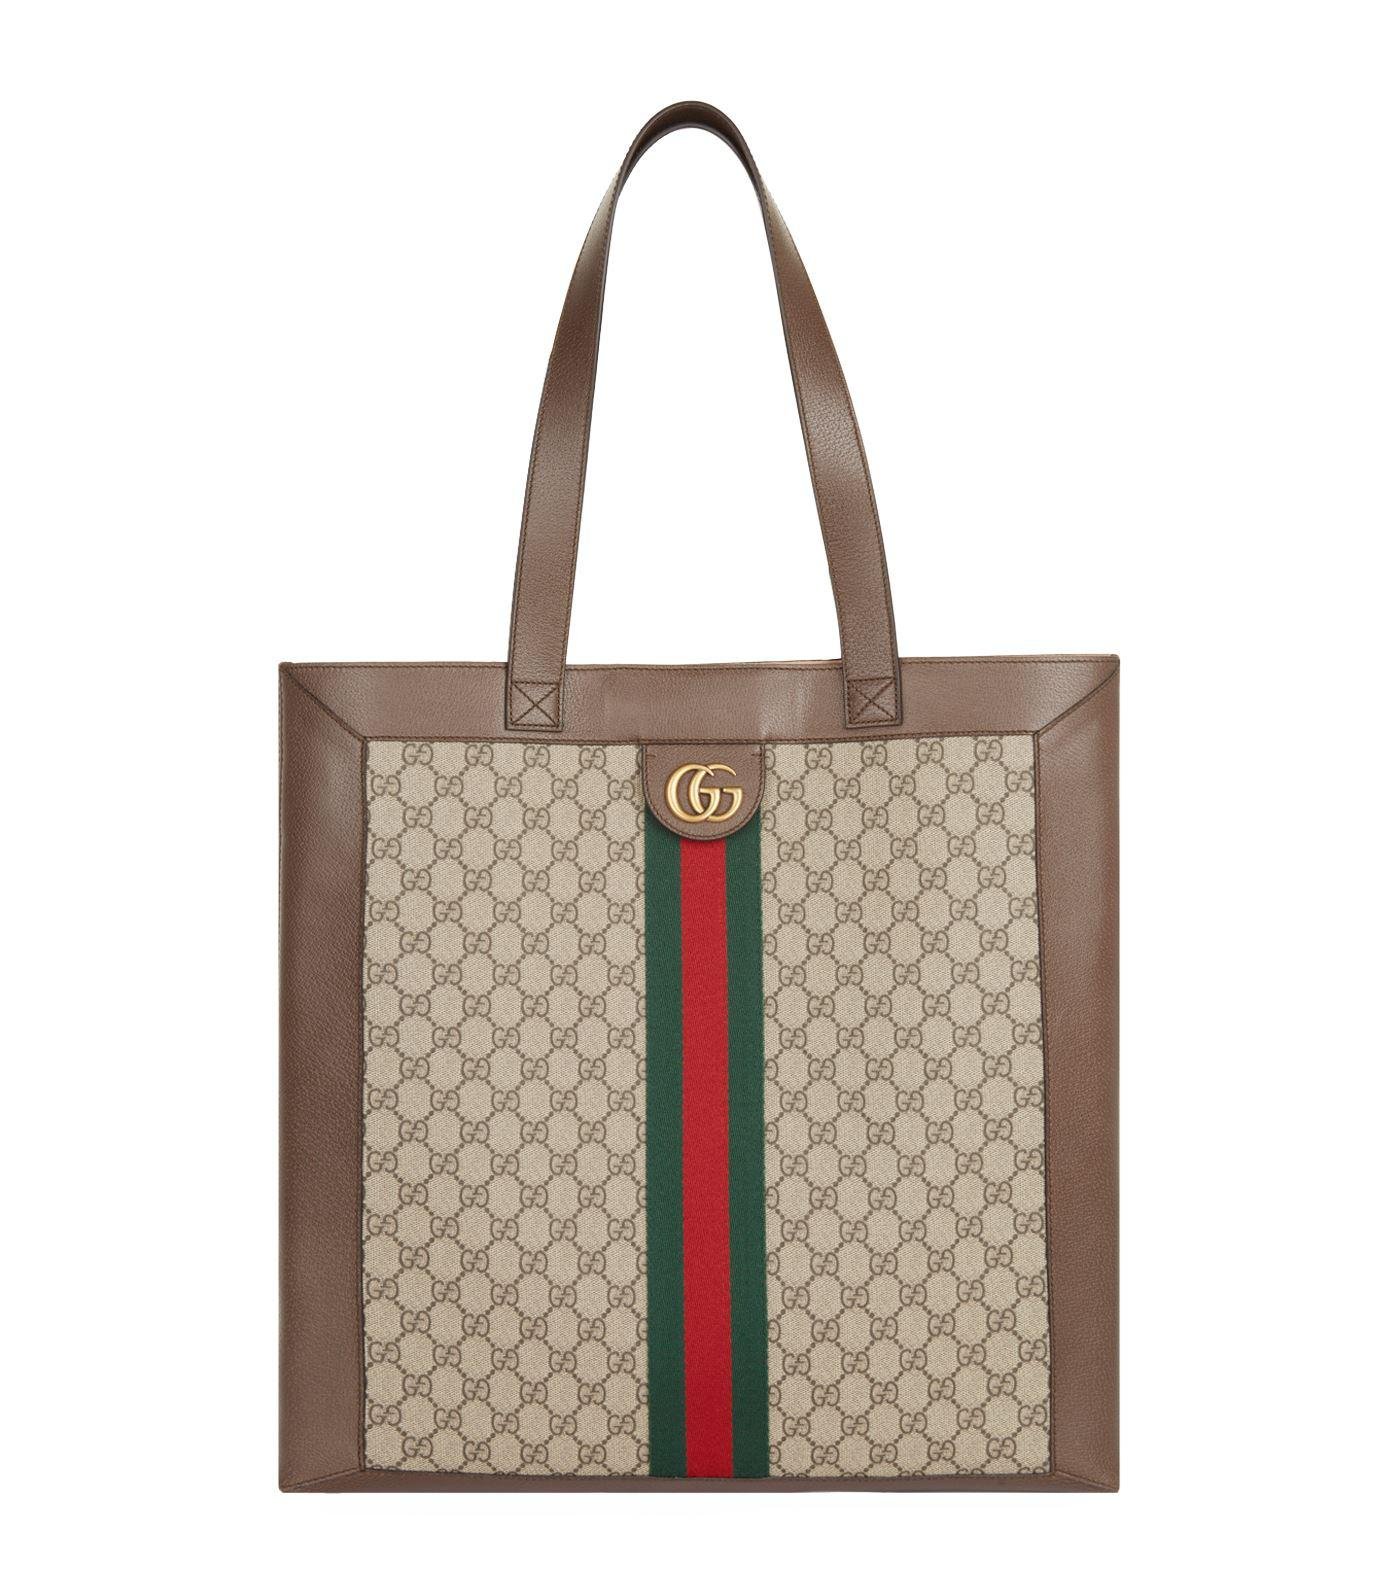 Gucci Canvas Supreme Monogram Tote Bag in Brown - Lyst